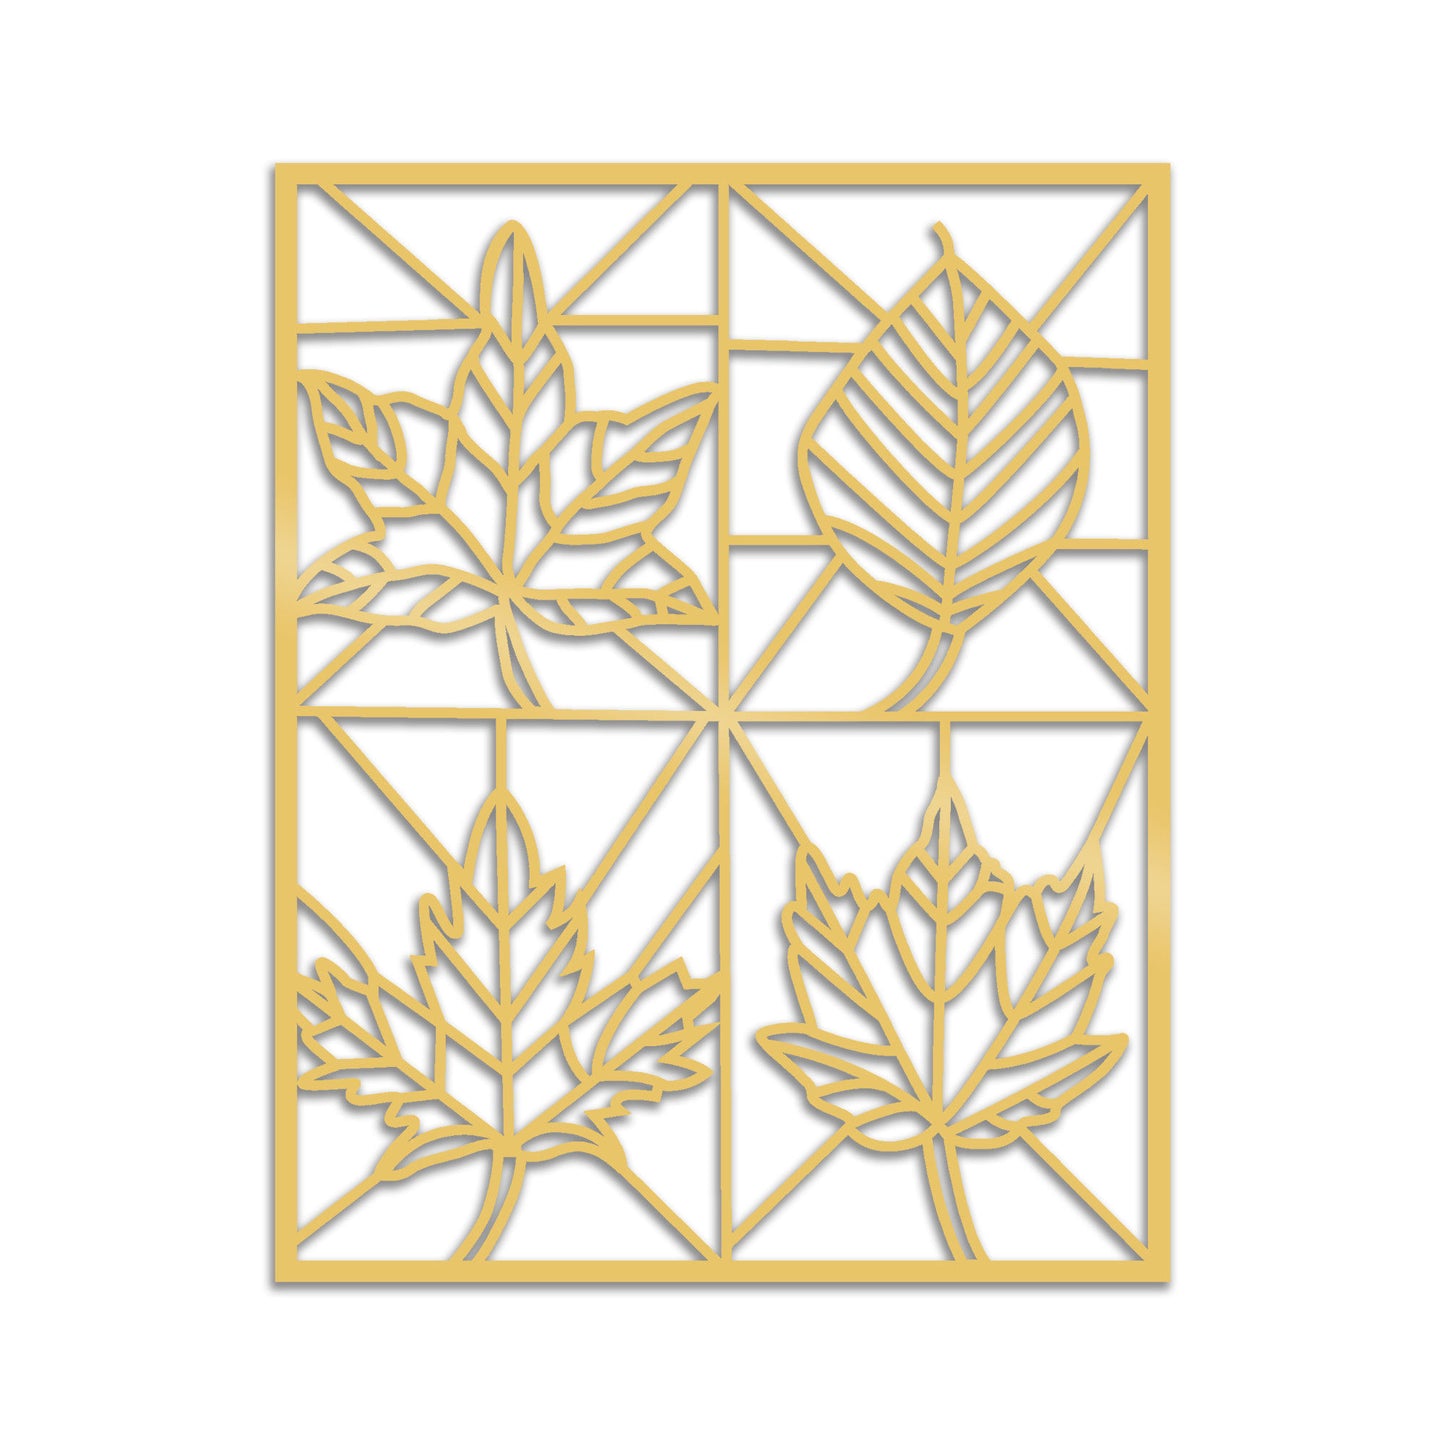 Foliage - Gold - Decorative Metal Wall Accessory